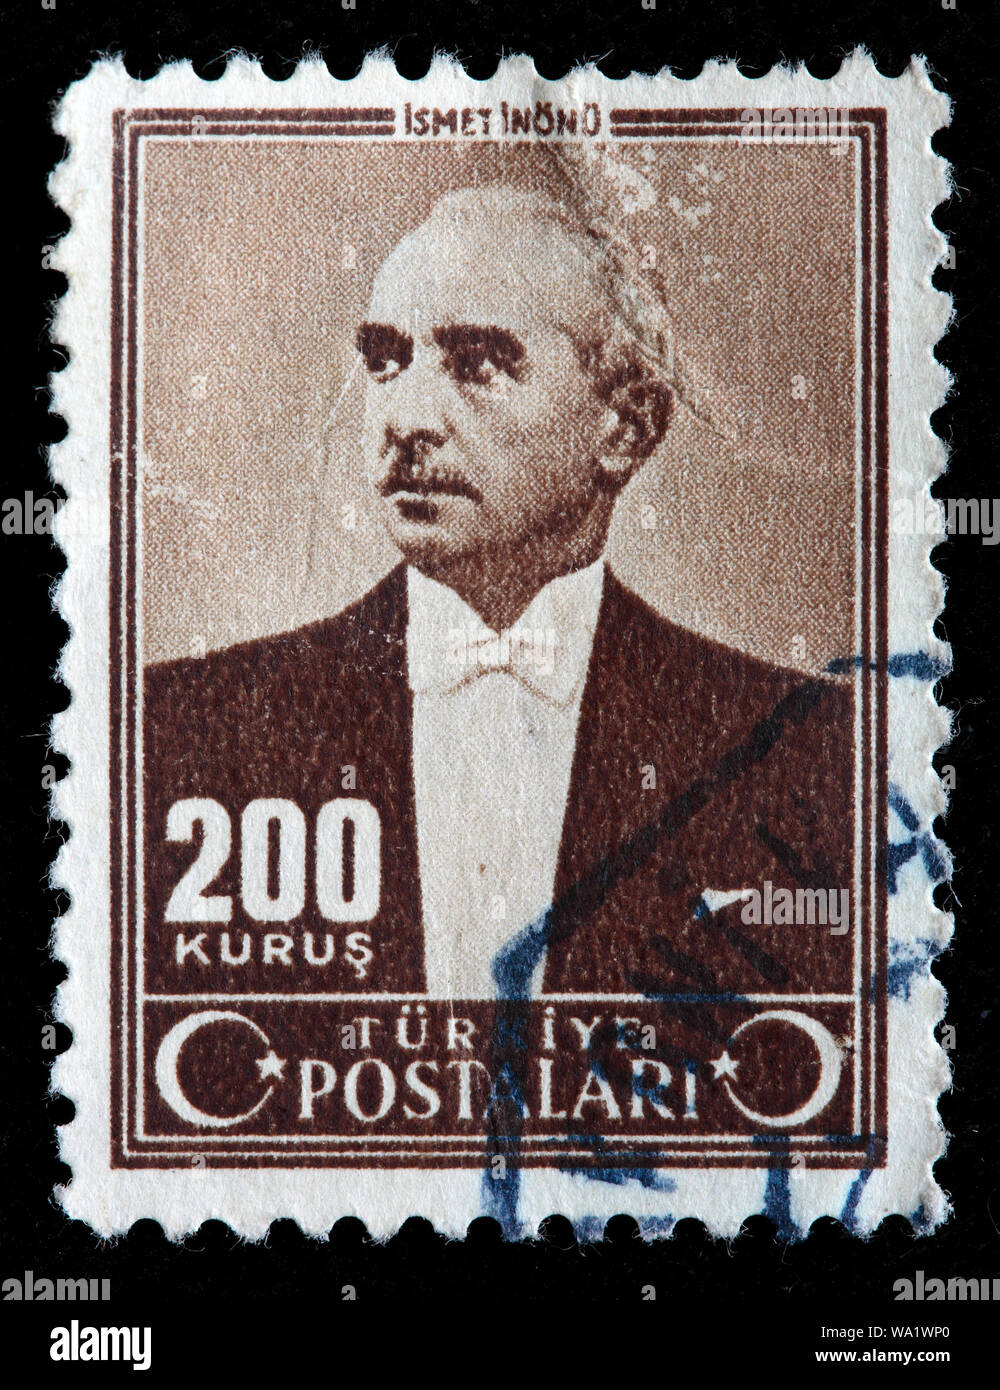 Ismet Inonu (1884-1973), Turkish soldier, statesman, President of Turkey, postage stamp, Turkey, 1942 Stock Photo